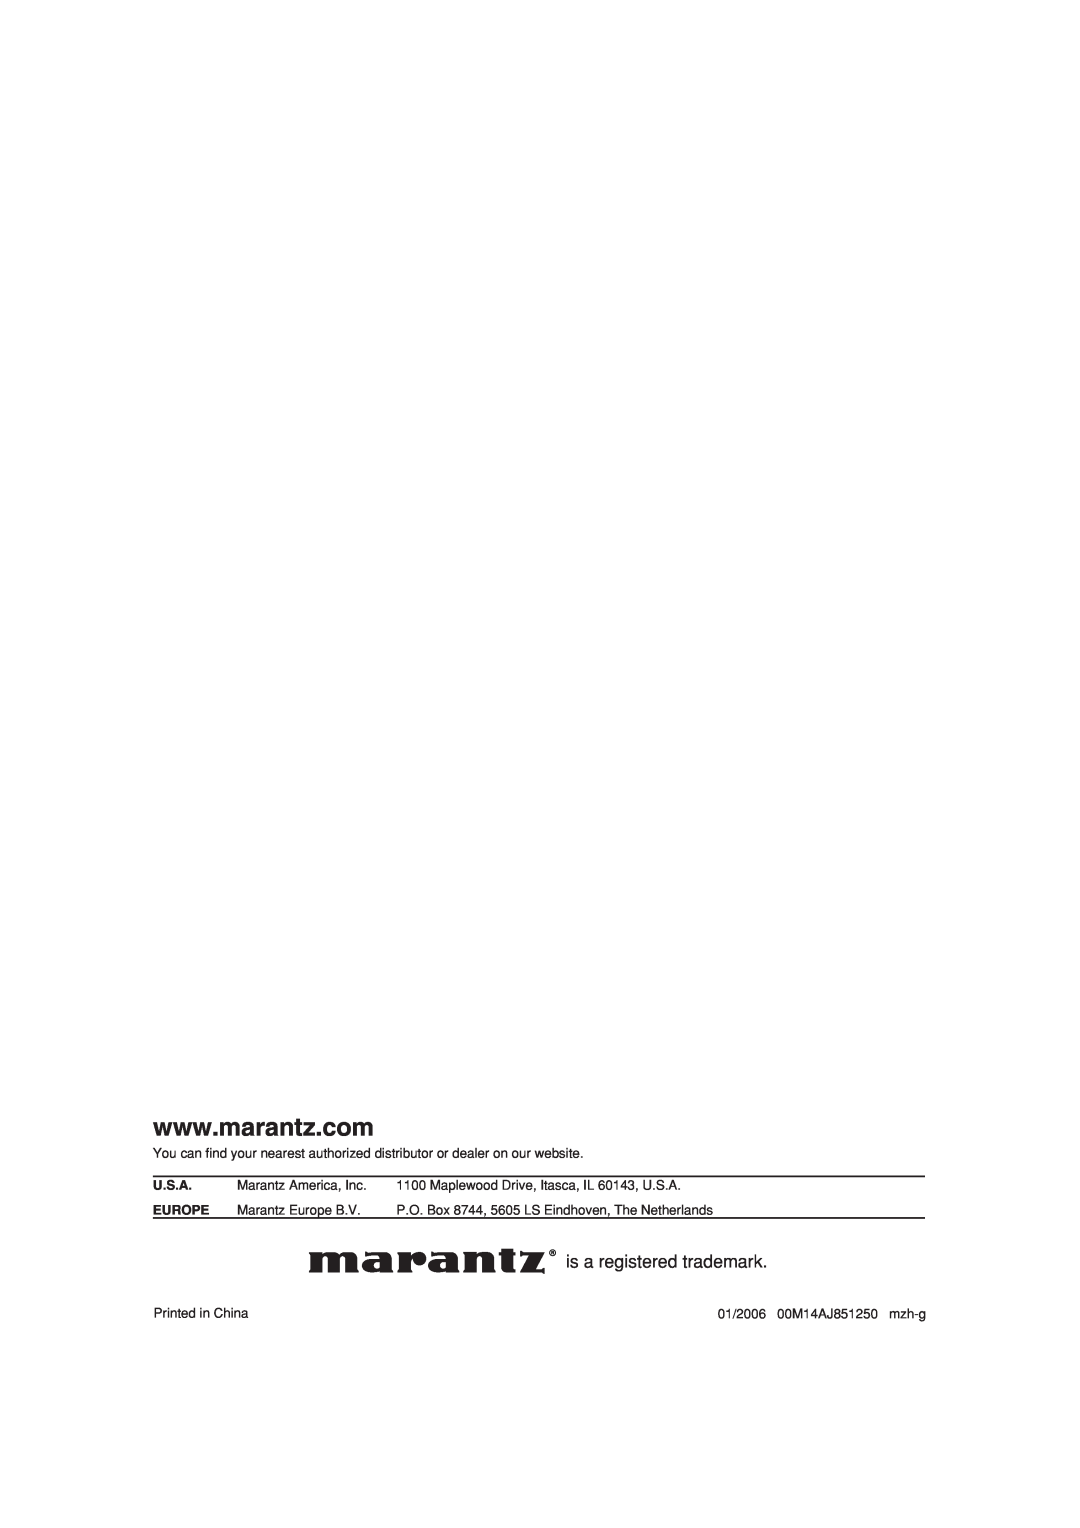 Marantz PM7001 manual is a registered trademark, U.S.A, Europe 